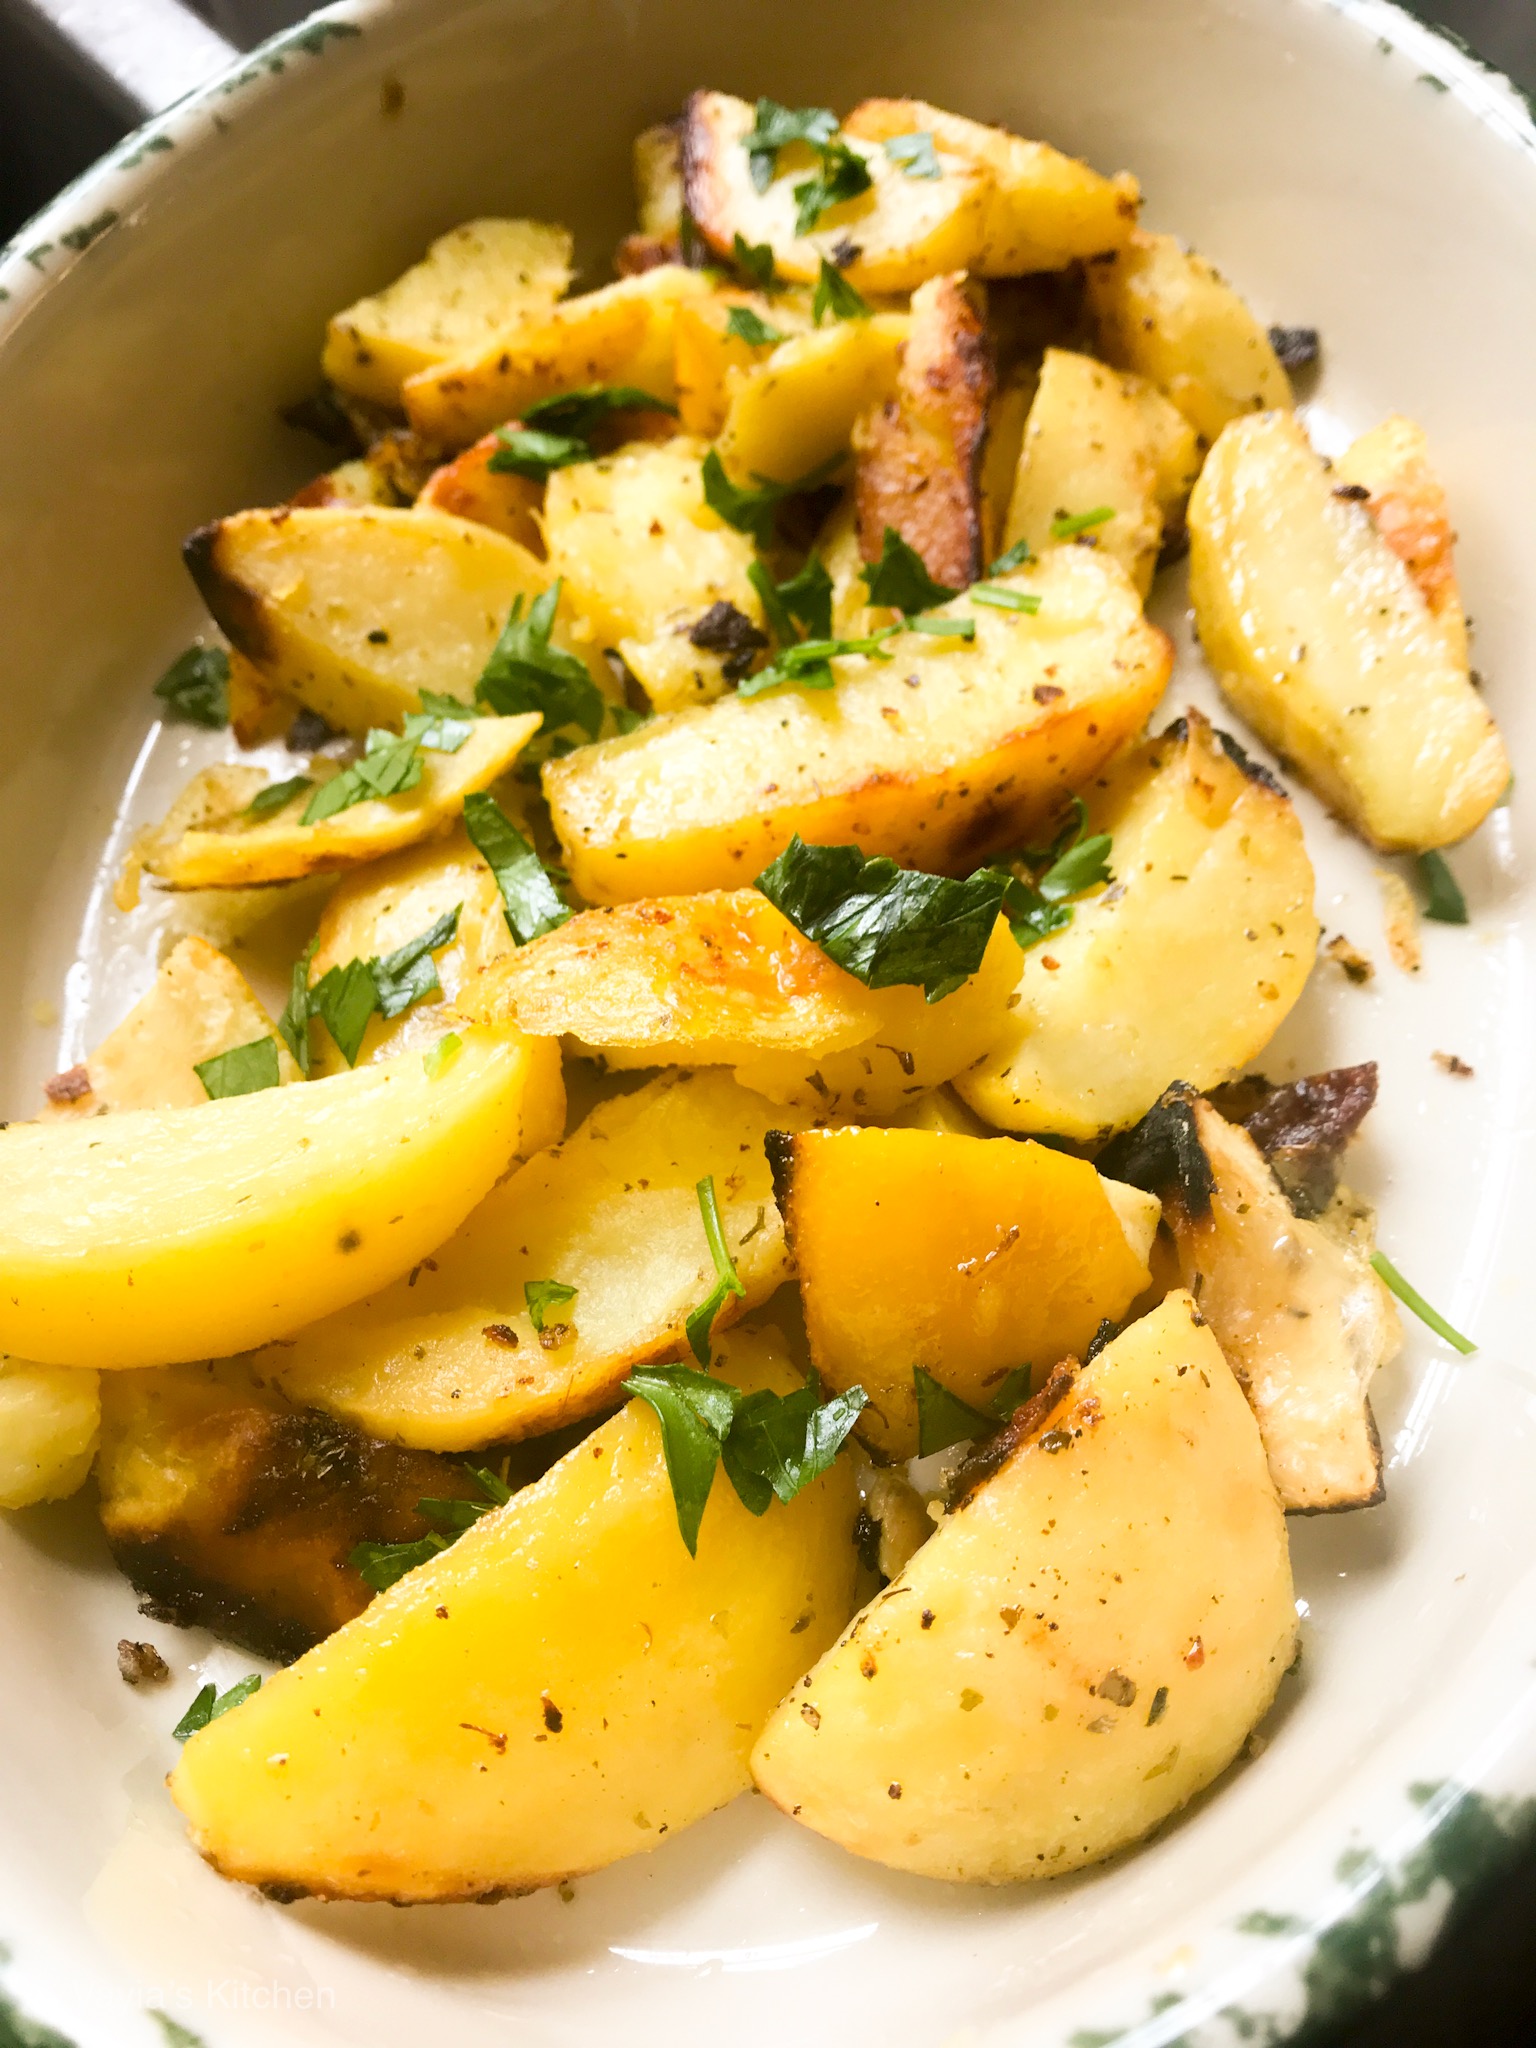 Greek Style Lemon Roasted Potatoes - Vayia's Kitchen